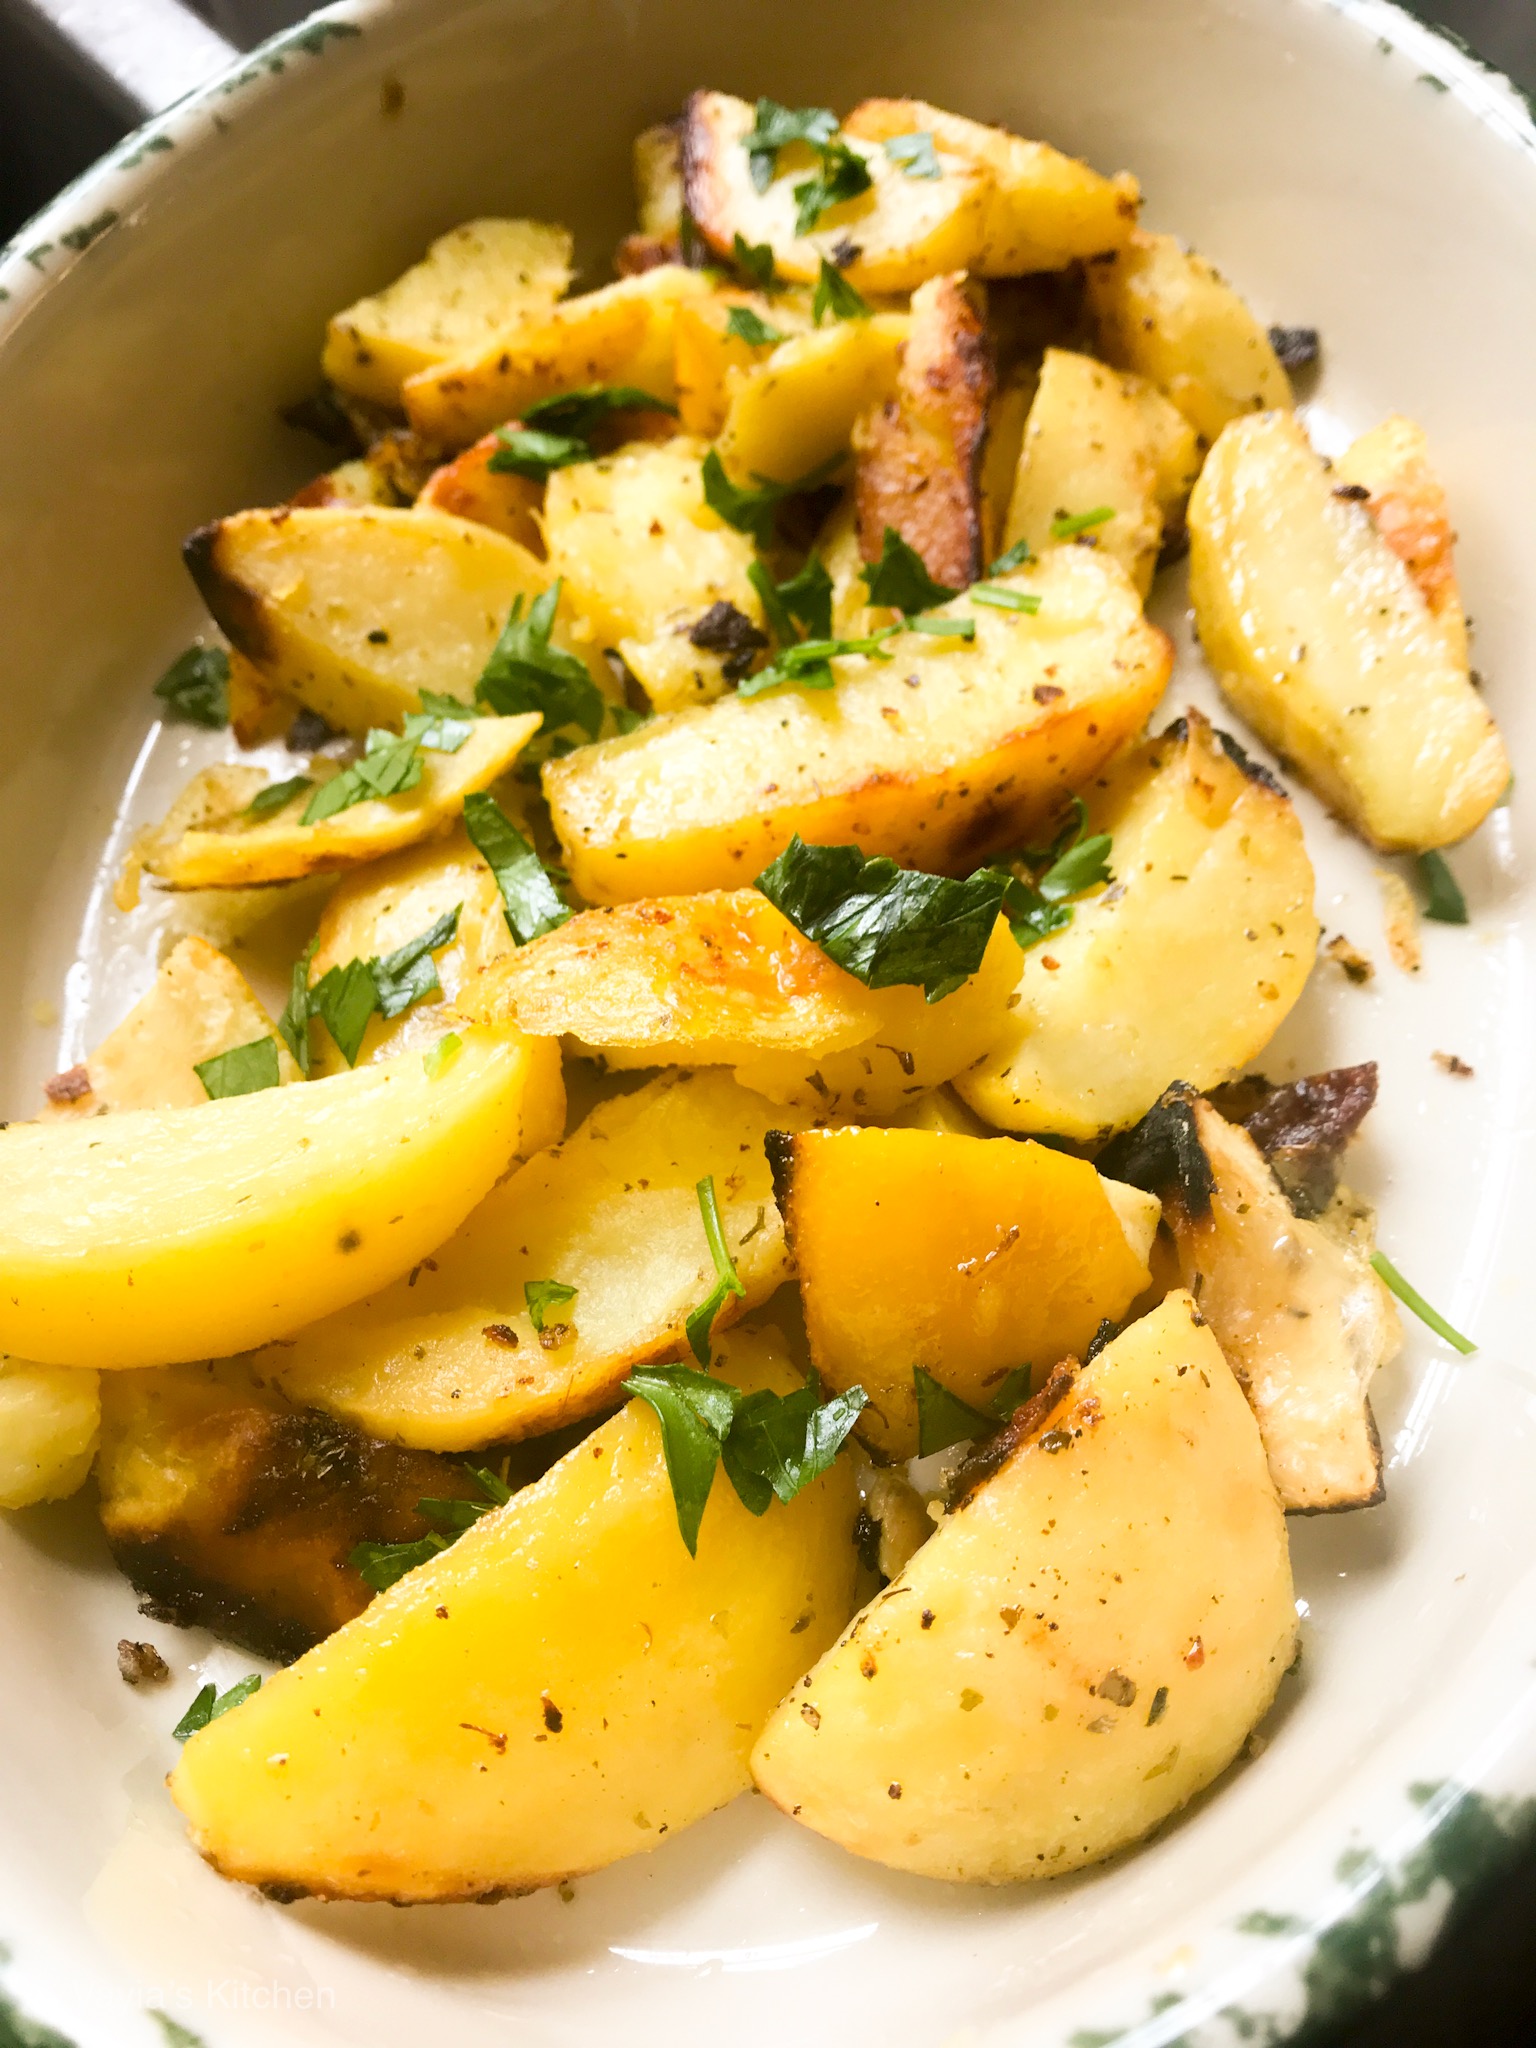 Greek Style Lemon Roasted Potatoes - Vayia's Kitchen